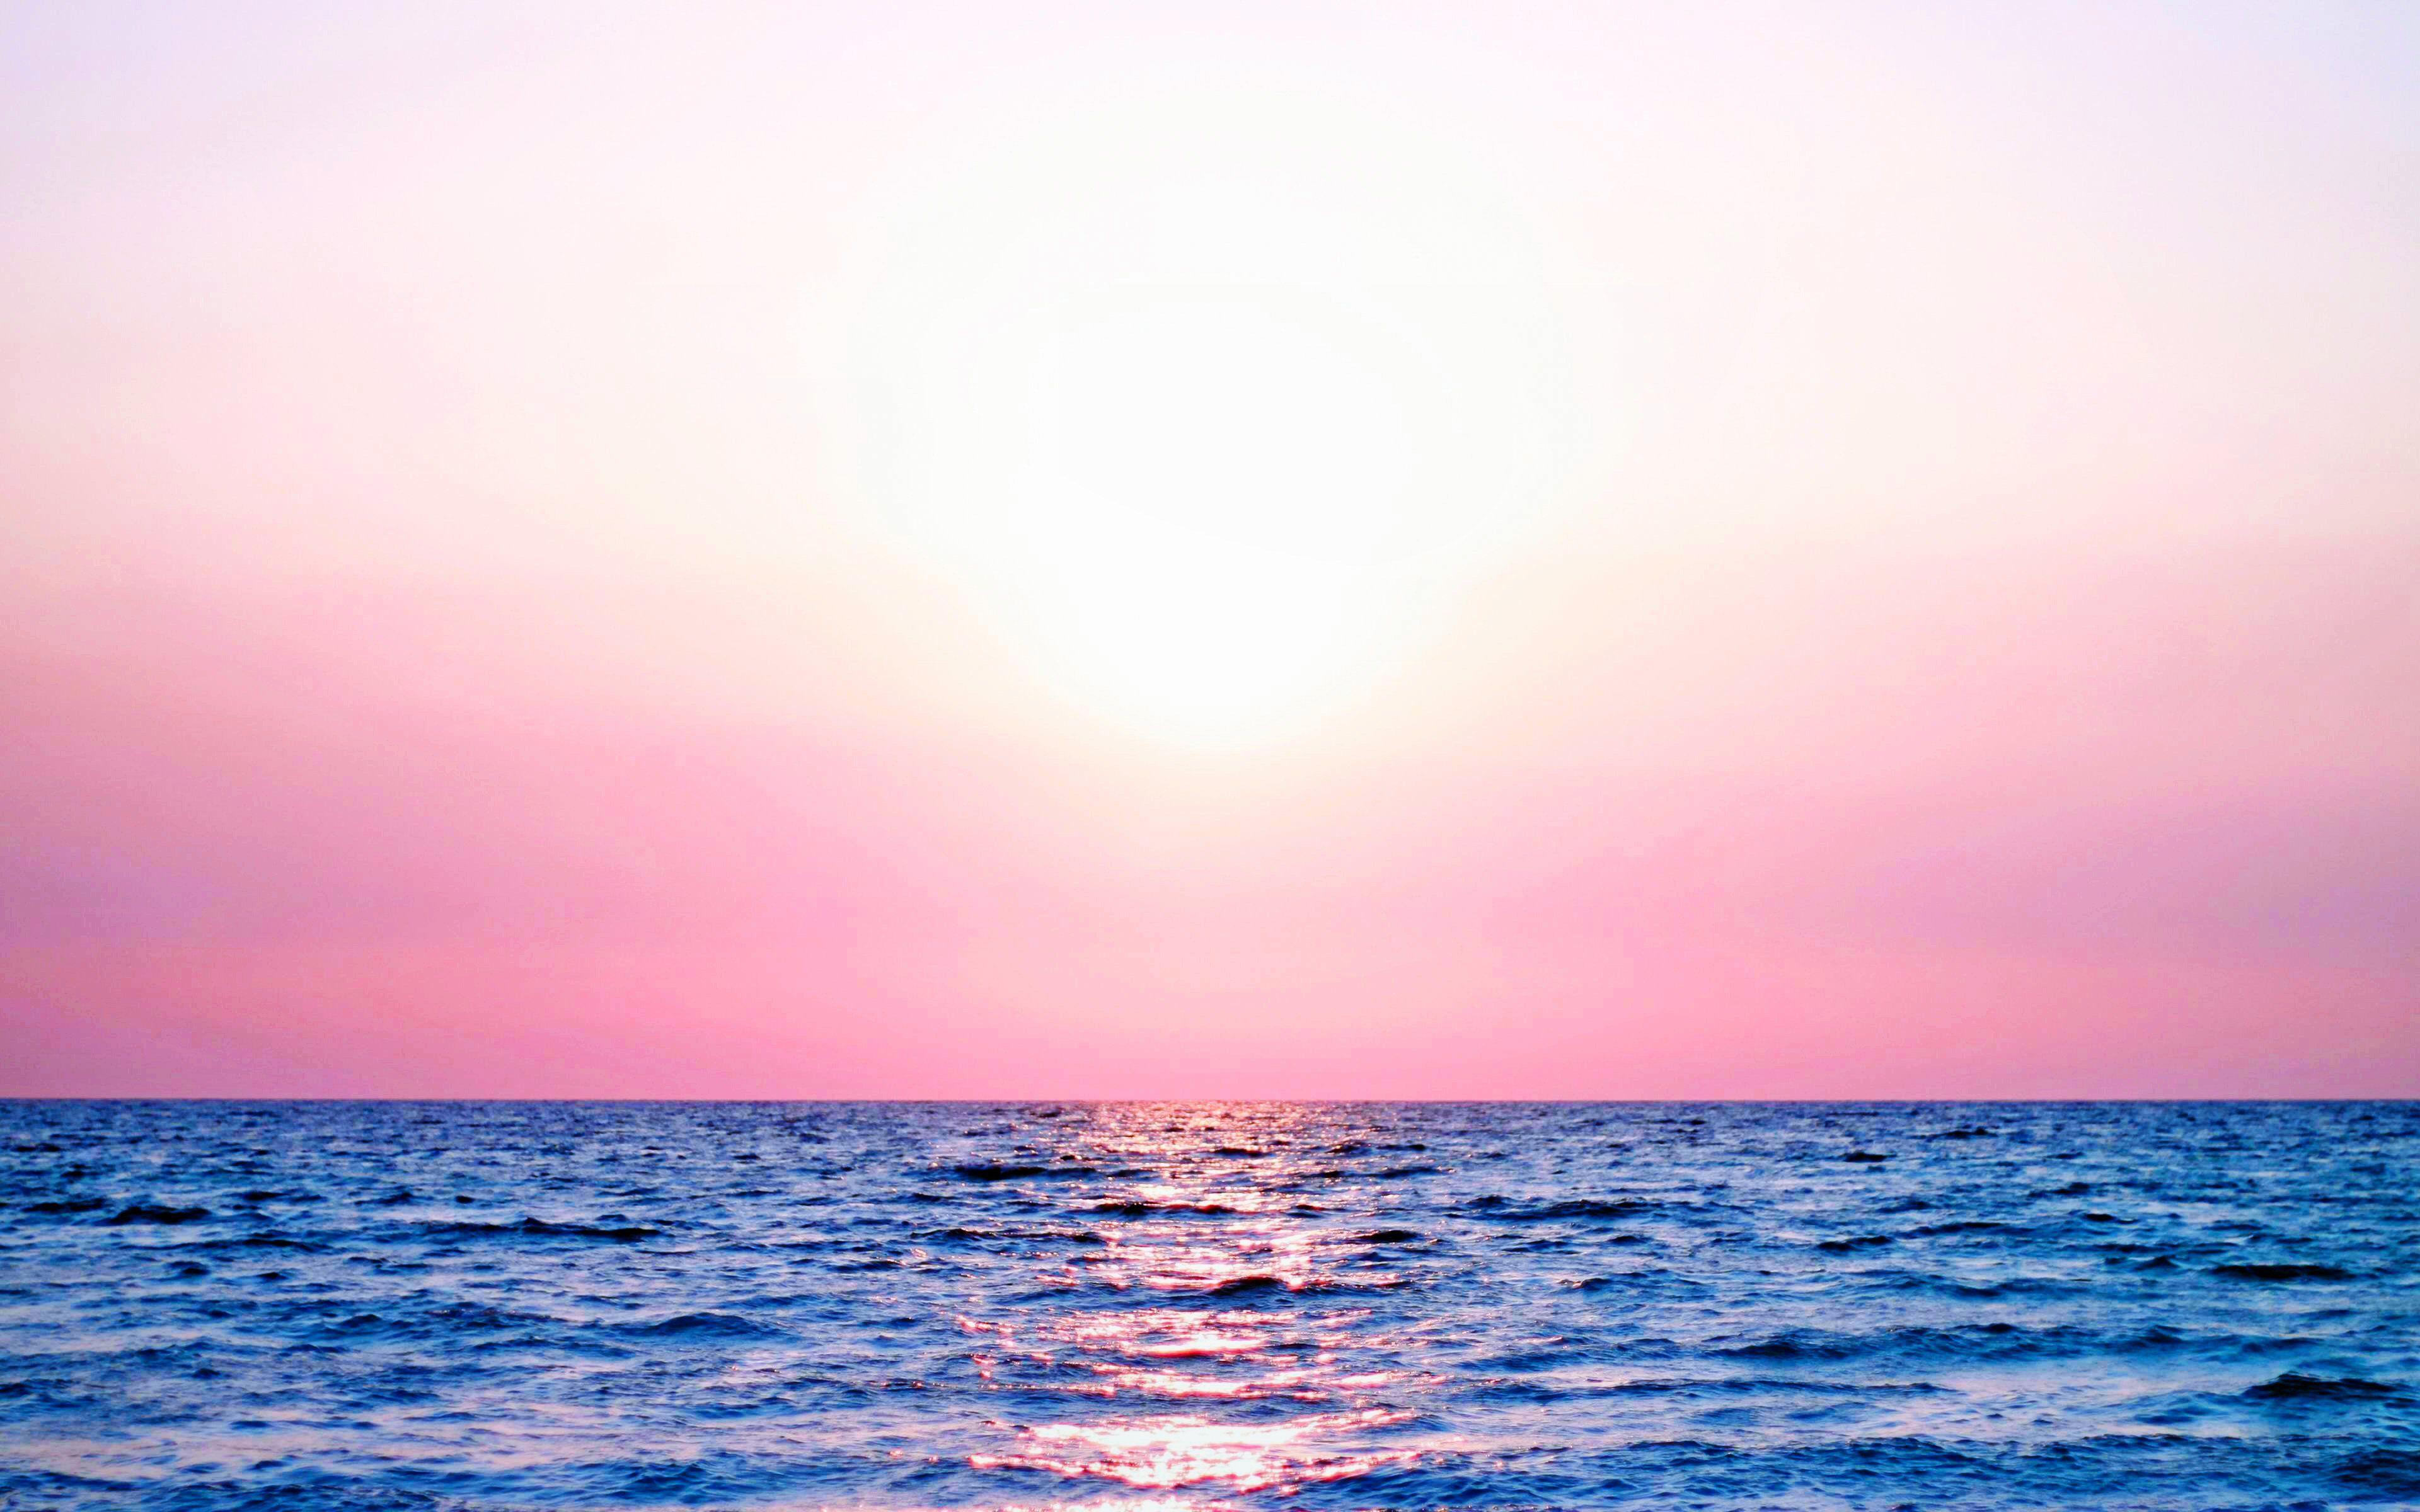 SUNSET [20] pink heaven [24februari2015tuesday] [122936] [VersionOne